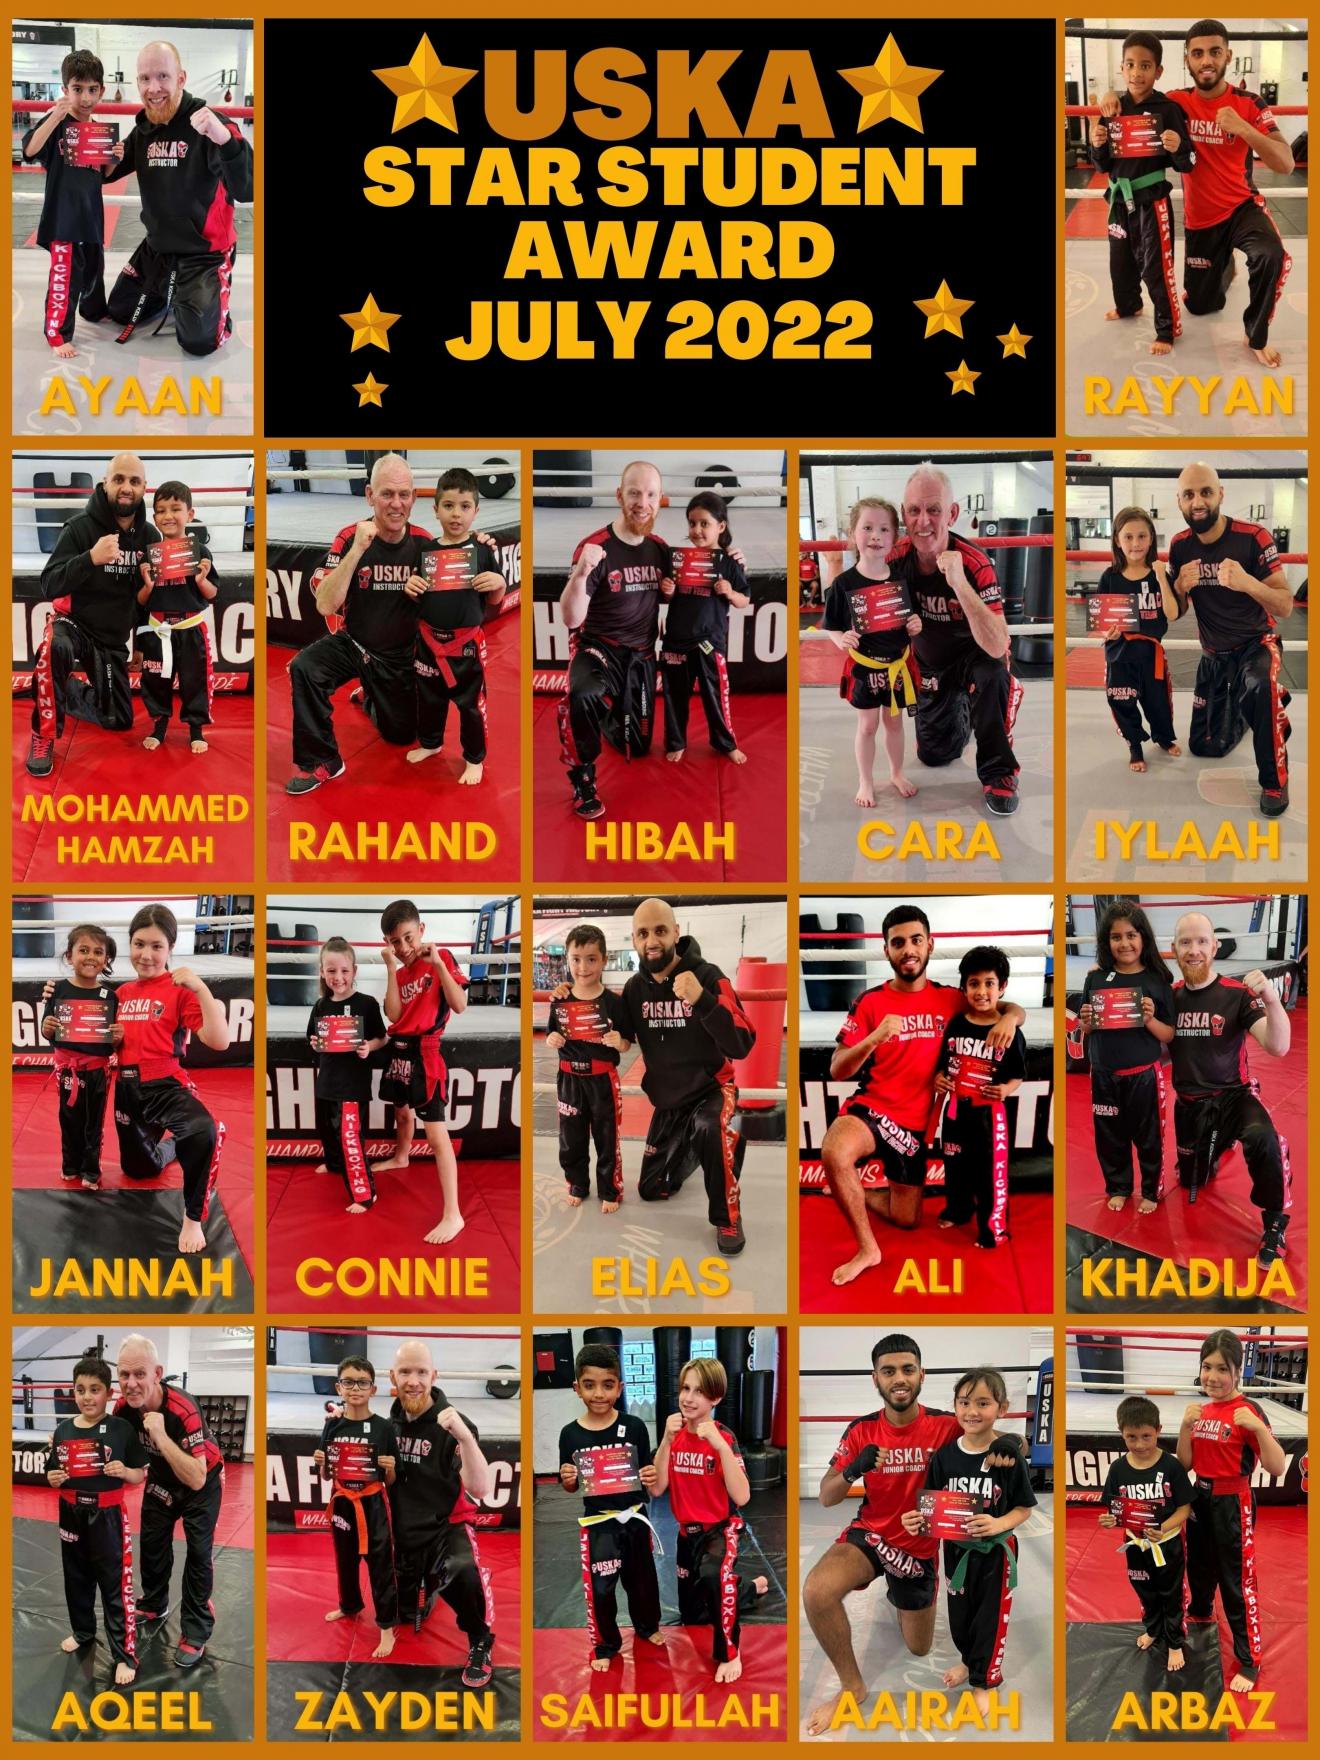 29-07-22 - USKA Ninja's Star Student Winners - July 2022